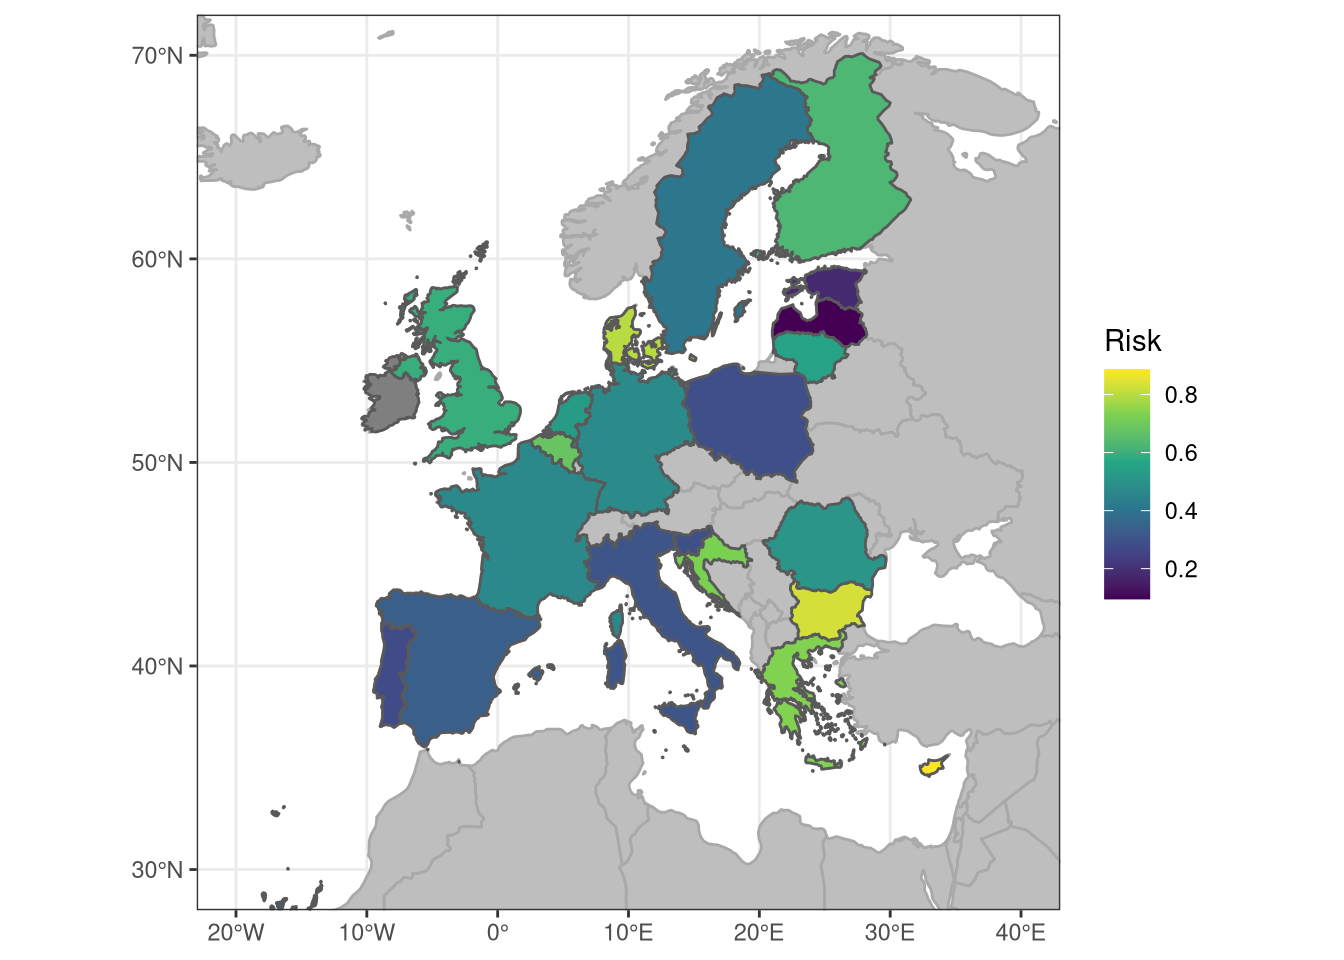 Fleetwise climate risk for the 23 EU coastal nations